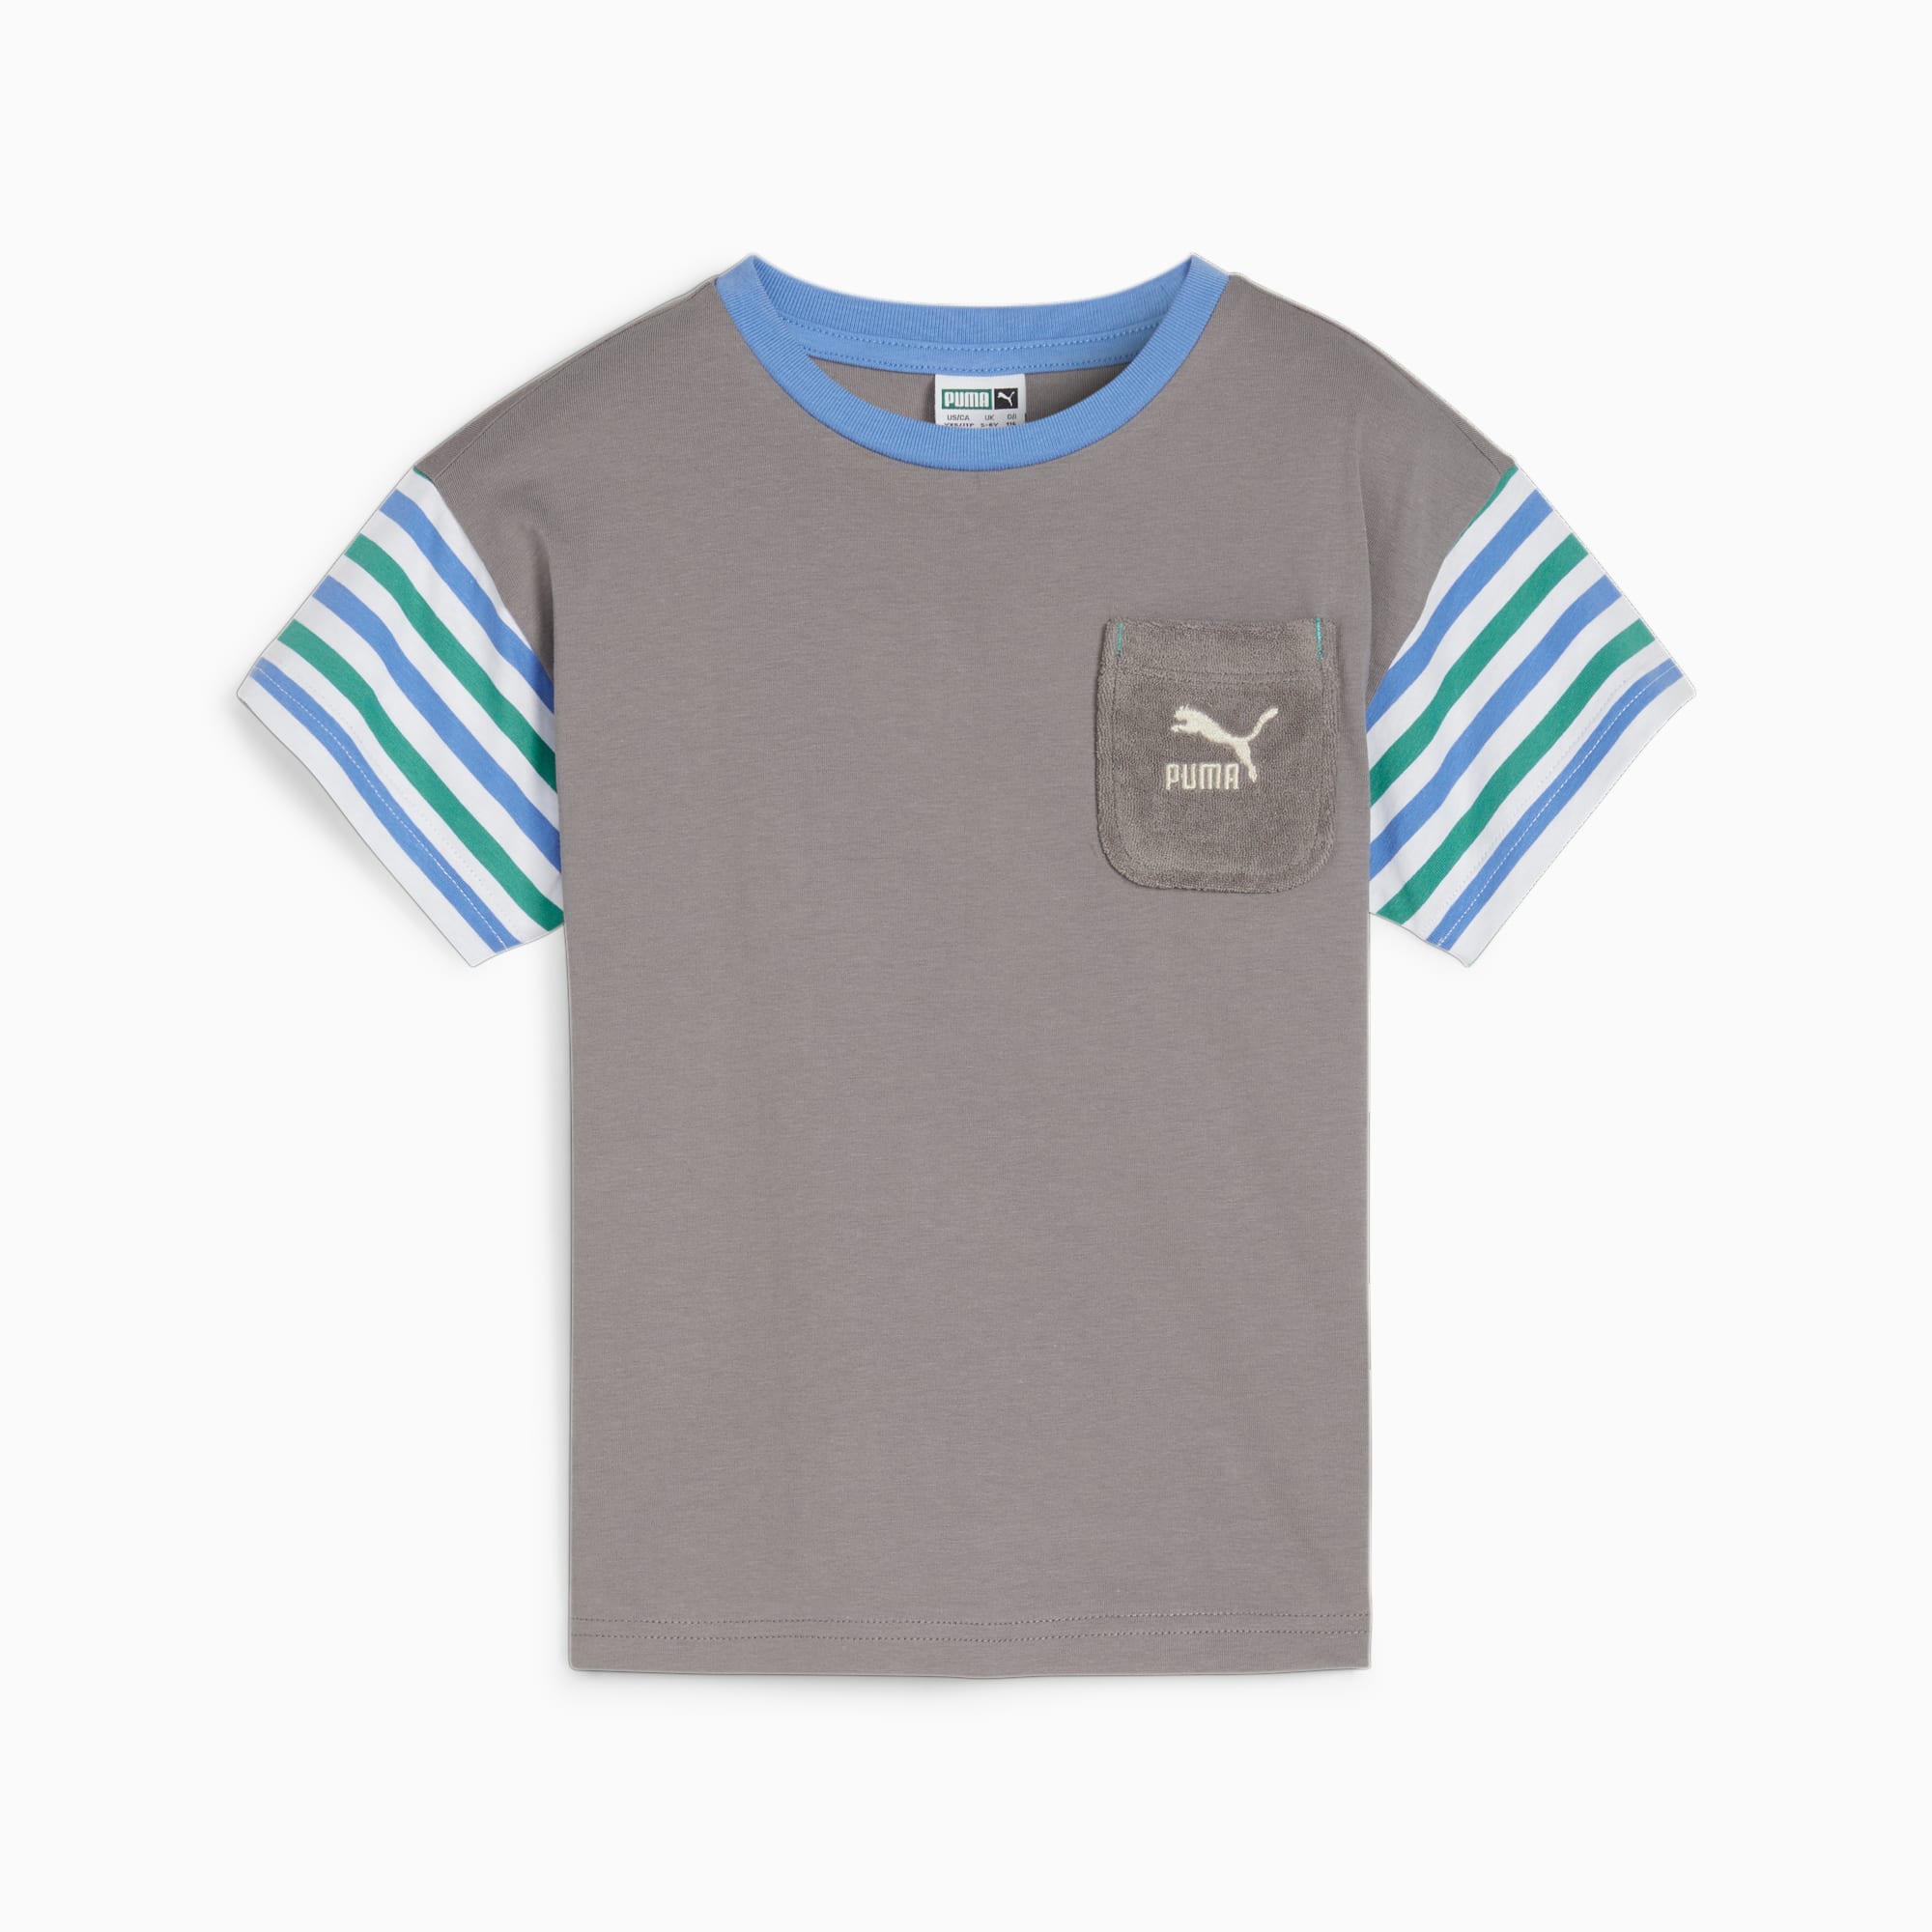 PUMA Summer Camp Classics Kids' T-Shirt, Cast Iron, Size 92, Clothing